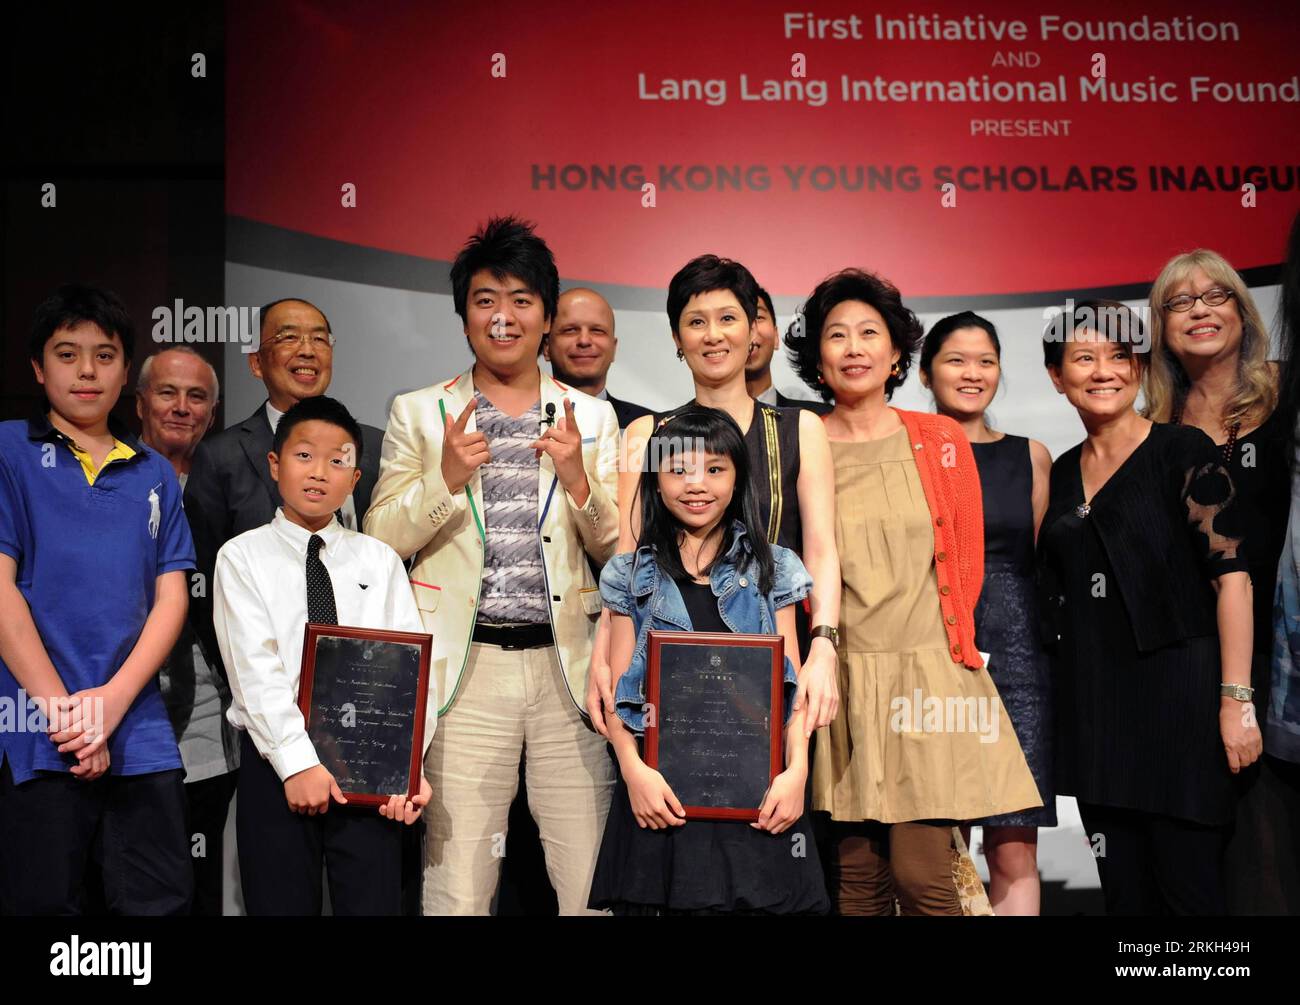 Bildnummer: 55682069  Datum: 06.08.2011  Copyright: imago/Xinhua (110806) -- HONG KONG, Aug. 06, 2011 (Xinhua) -- Chinese pianist Lang Lang (3rd L, Front) poses for photo with Kate Xintong Lee ( 4th L, Front) and Jonathan Jun Yang (2nd L, Front), two Hong Kong winners of this year s Young Scholars Program, in Hong Kong, south China, Aug. 6, 2011. Lang Lang announced the Hong Kong winners of this year s Young Scholars Program here Saturday. The Young Scholars Program is a signature initiative of the Lang Lang International Music Foundation, in which Lang Lang personally chooses and mentors tale Stock Photo